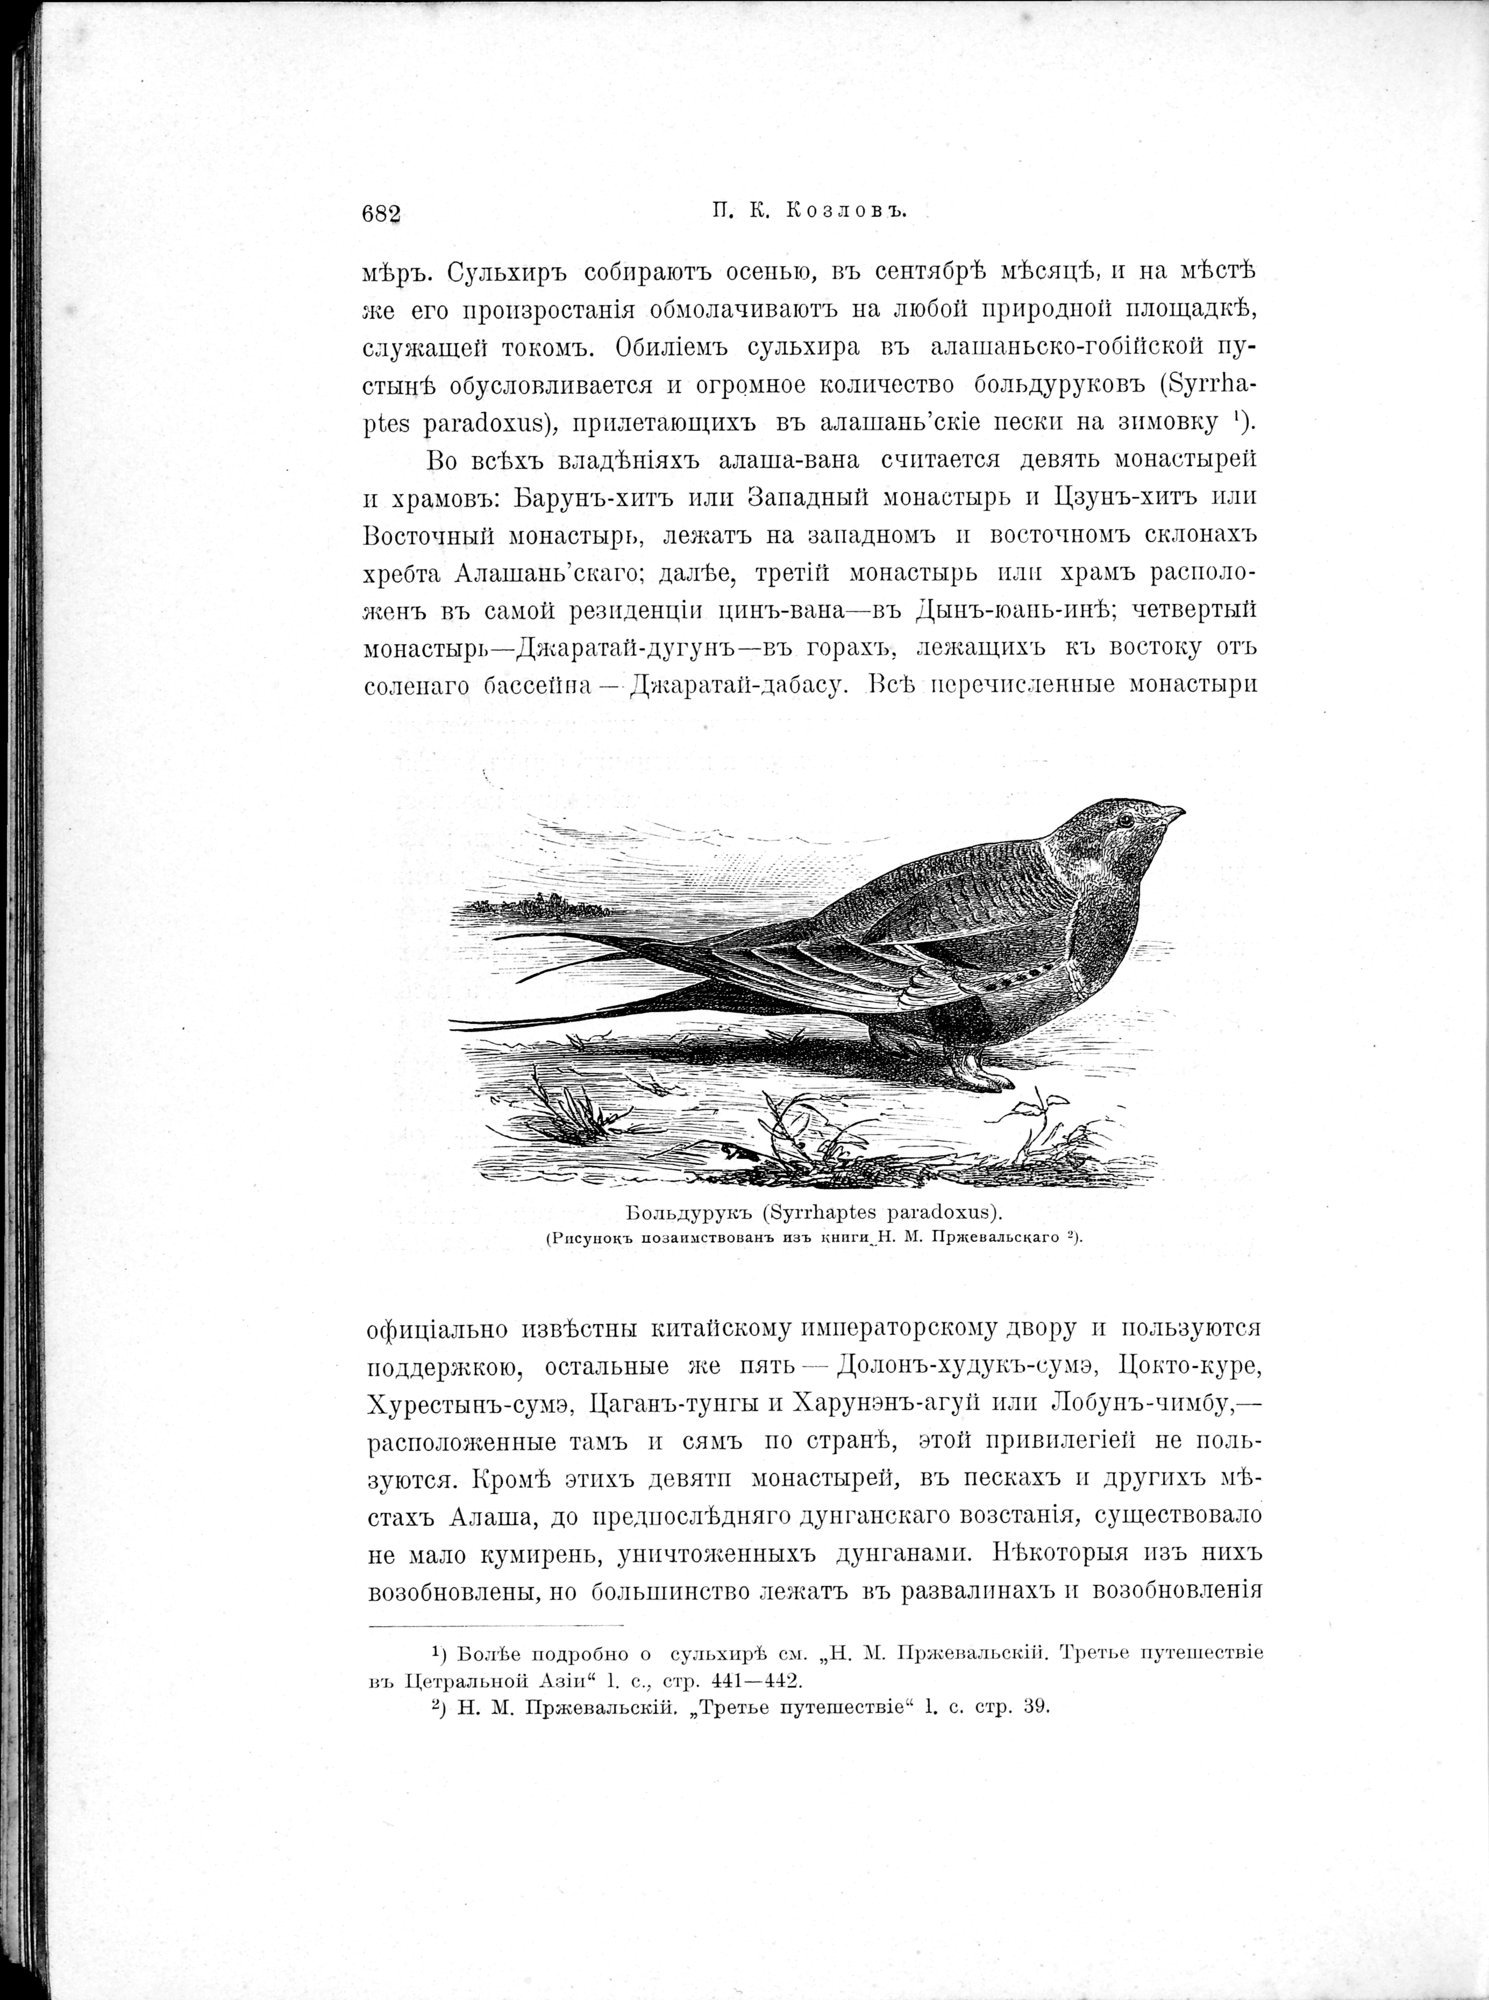 Mongoliia i Kam : vol.2 / Page 516 (Grayscale High Resolution Image)